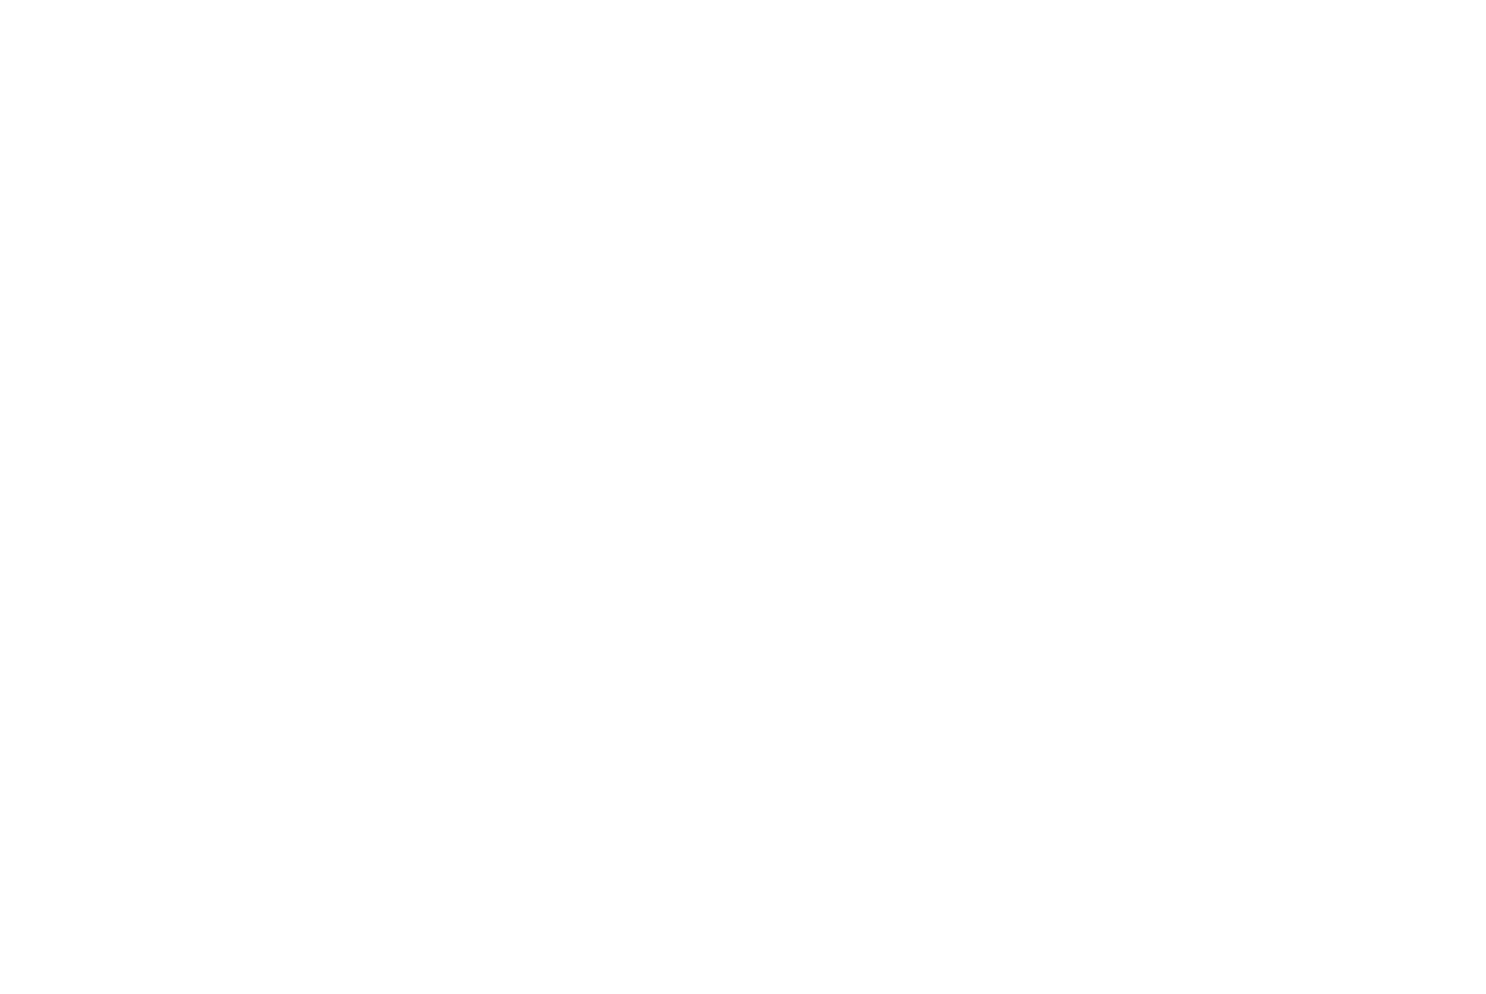 Conserva Irrigation logo